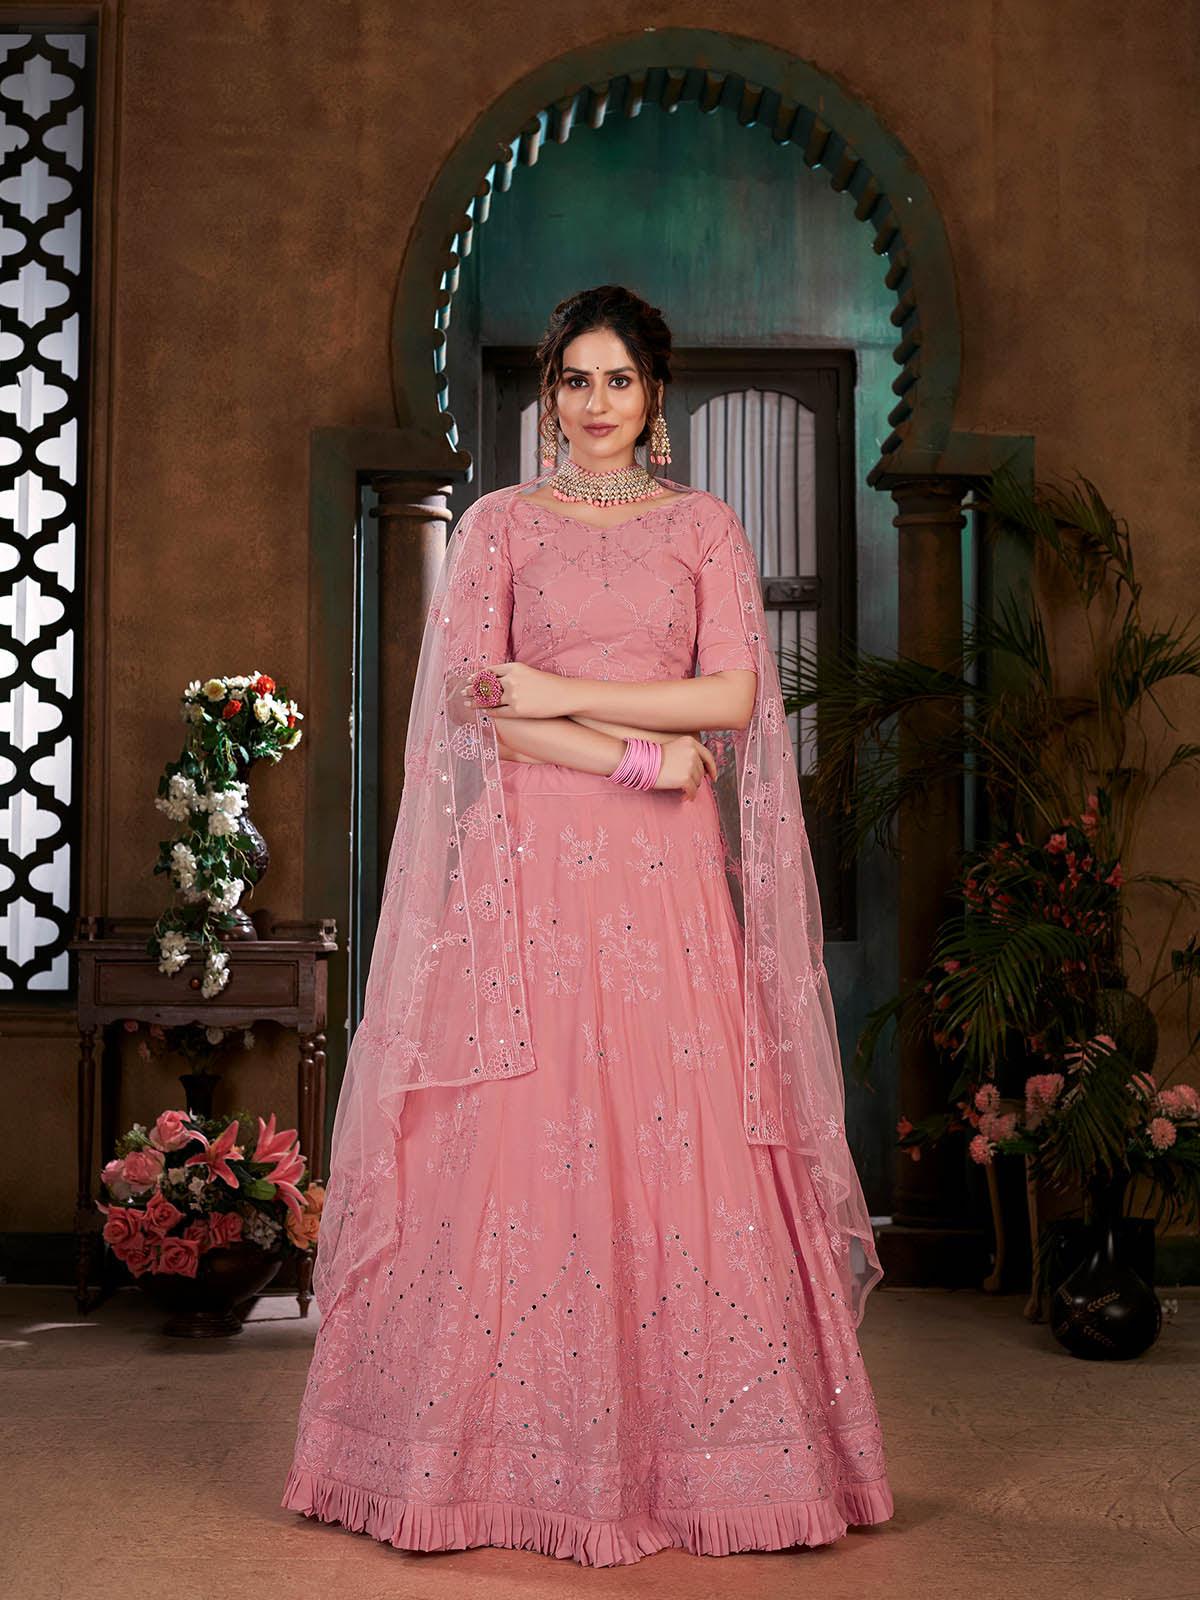 Kiara Advani Is A Picture Of Bridal Perfection Draped In A Manish Malhotra  Lehenga For Wedding To Sidharth Malhotra